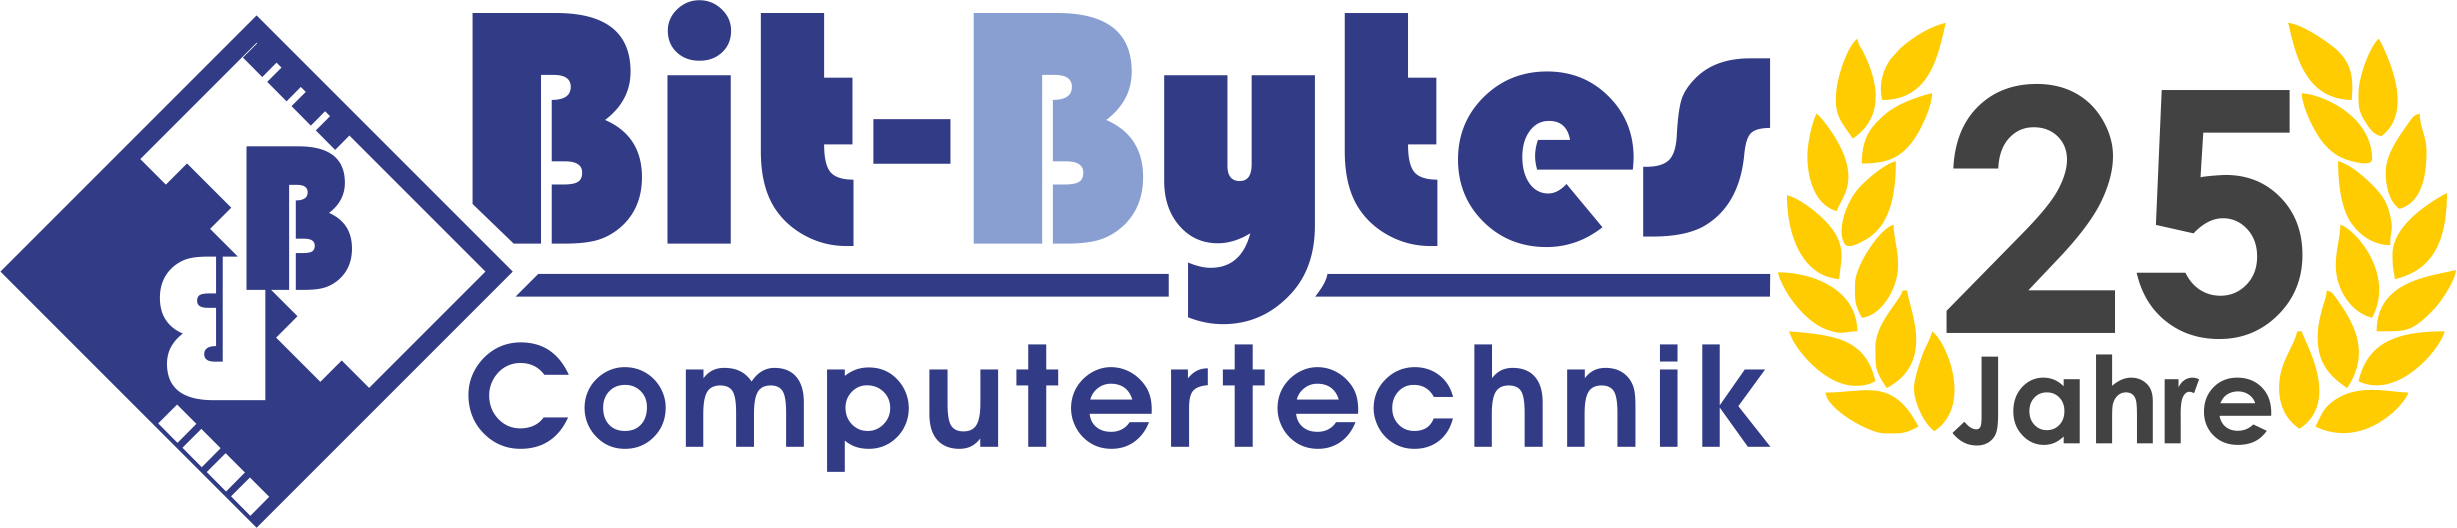 PC Doktor Bit-Bytes Computertechnik Bitburg